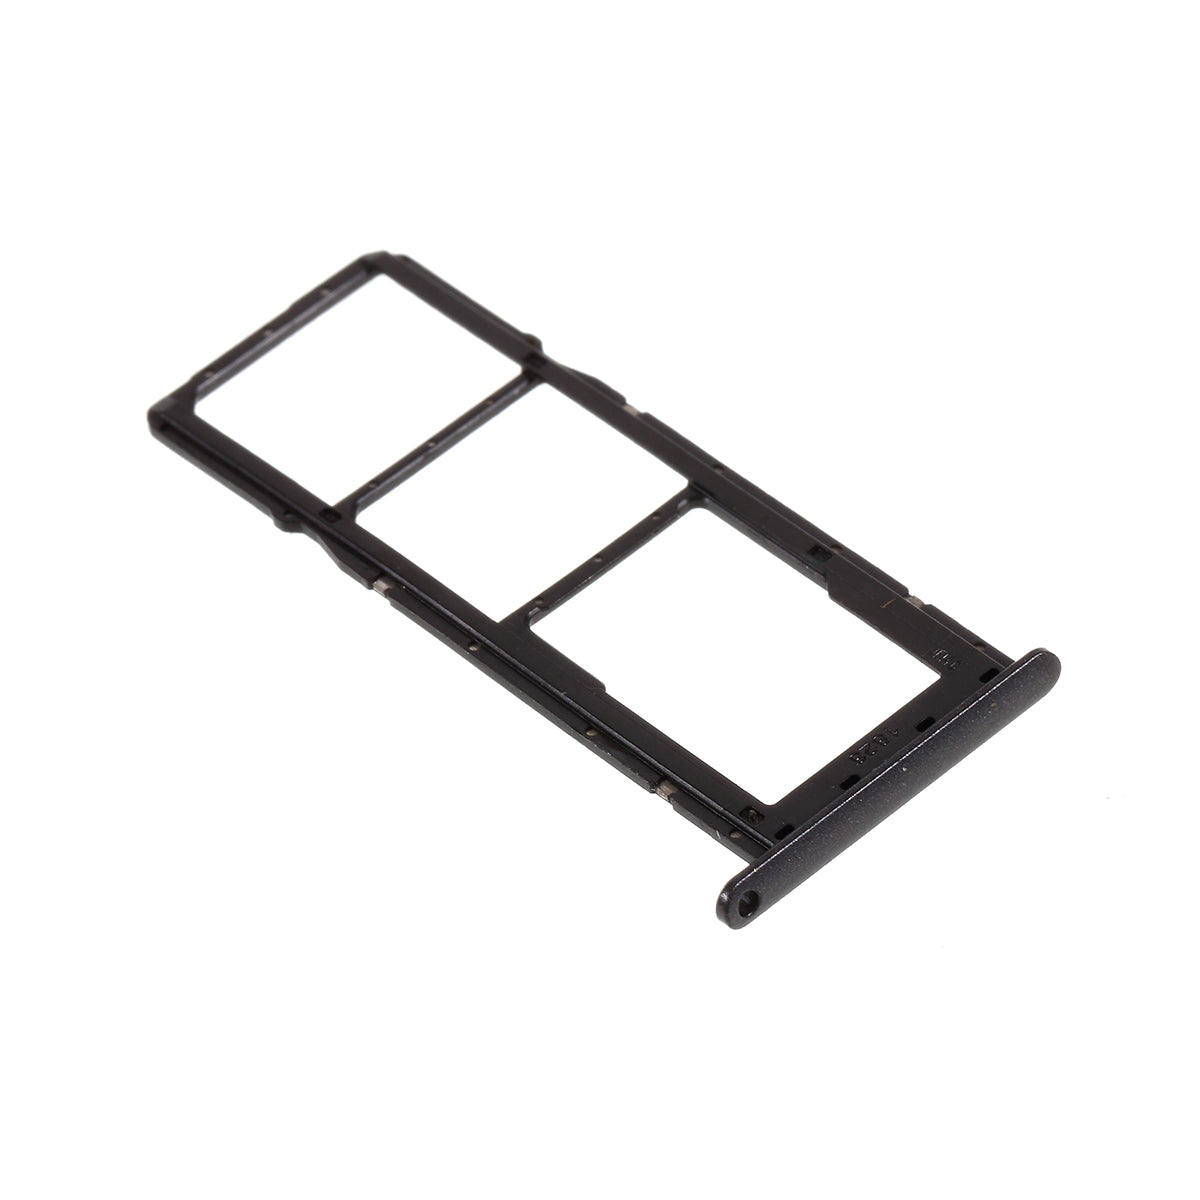 OEM SIM Card Tray Holder Replacement for Huawei Enjoy 9e MRD-AL00, MRD-TL00 - Black